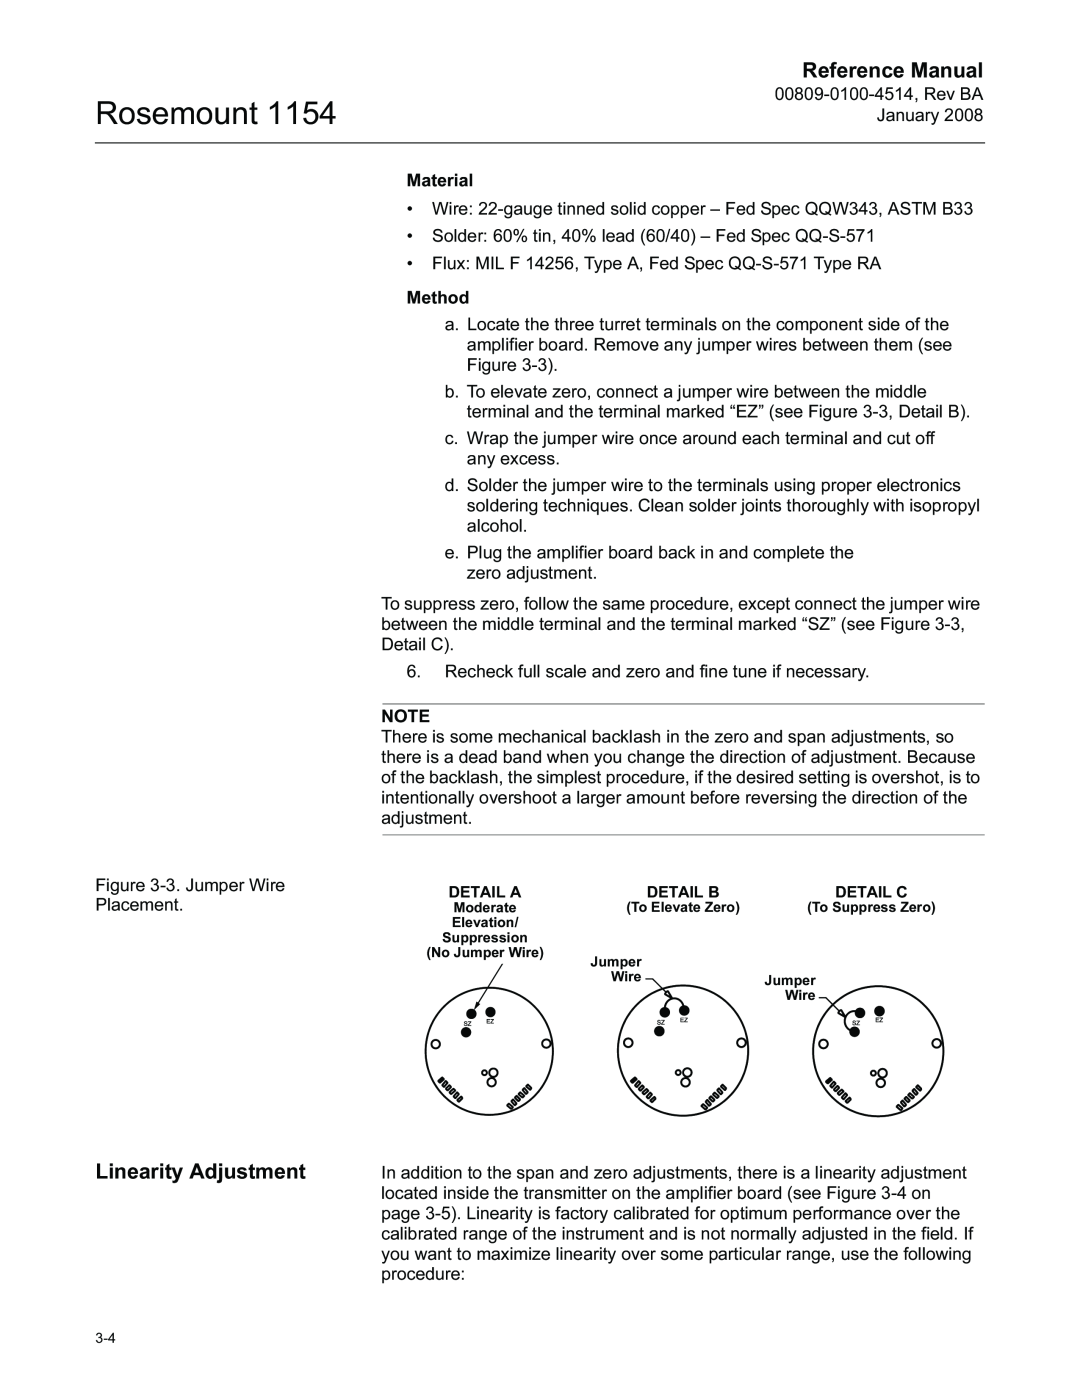 Emerson 00809-0100-4514, 1154 manual Linearity Adjustment, Rosemount, Reference Manual 